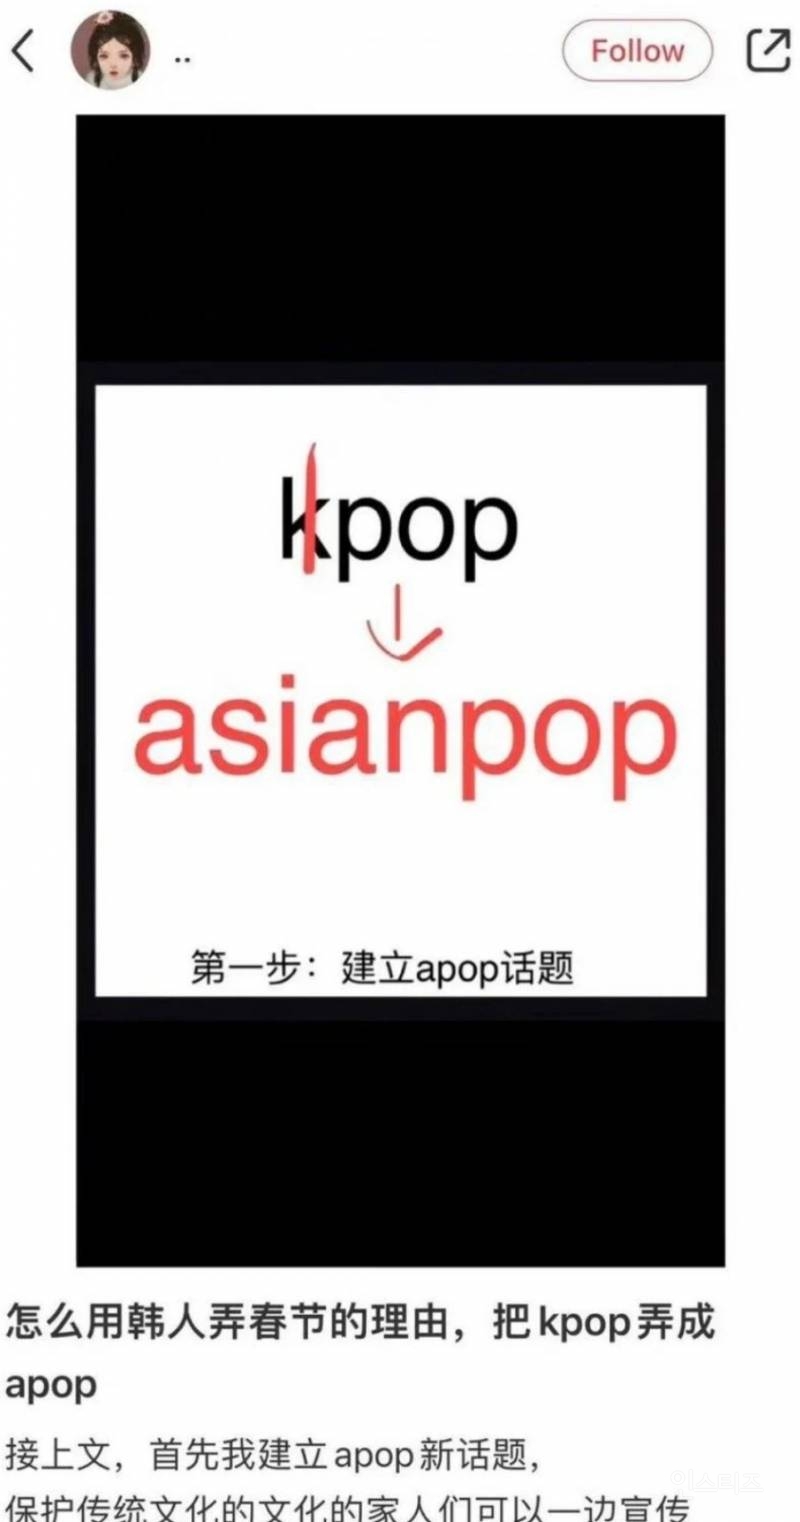 k-pop을 아시안팝으로 바꾸는 운동 | 인스티즈